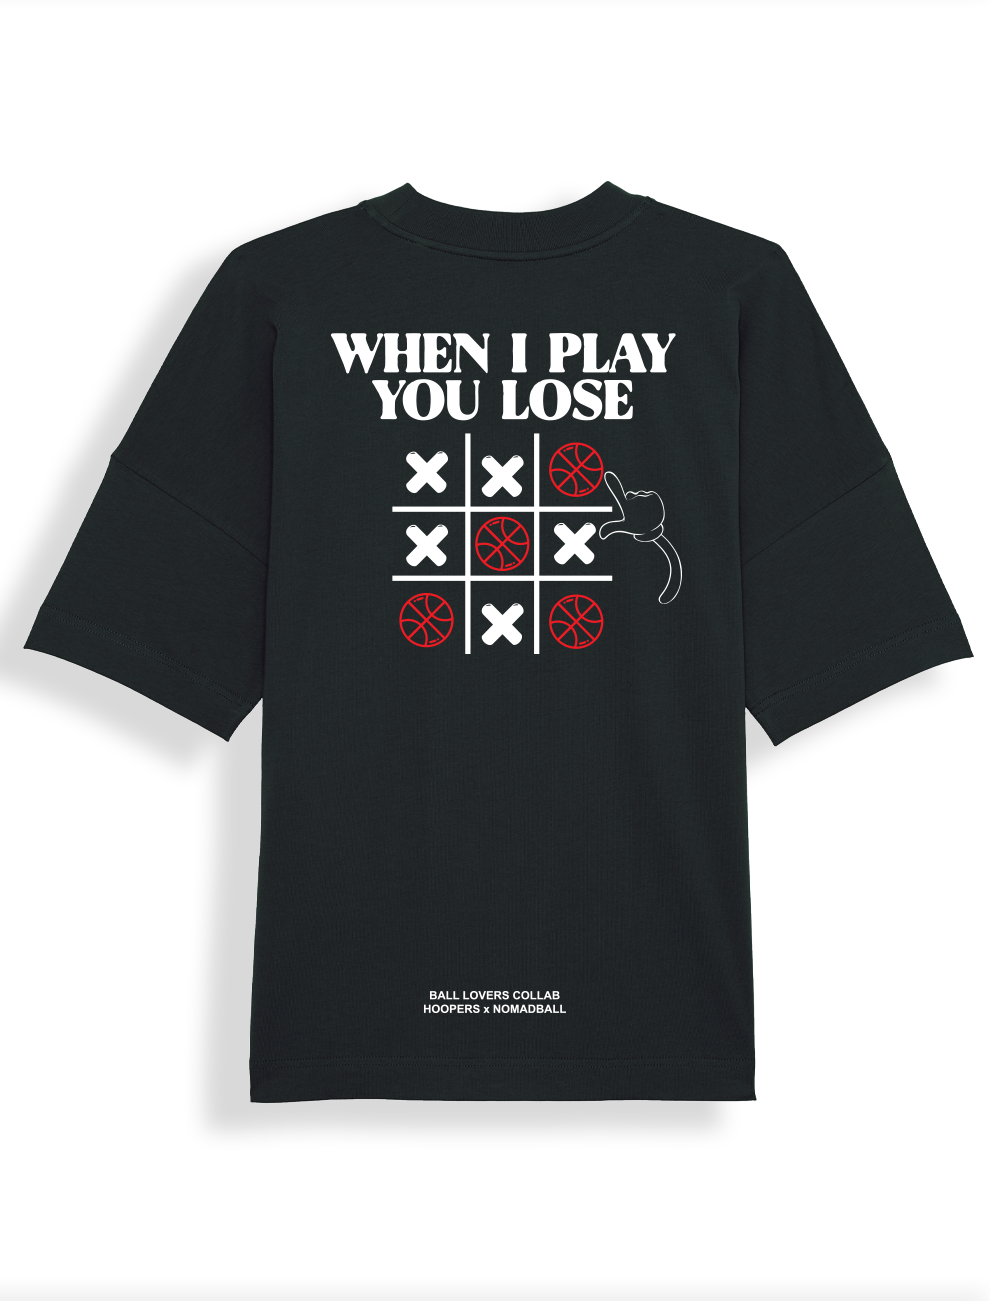 HOOPERS x NOMADBALL - When I Play T-Shirt